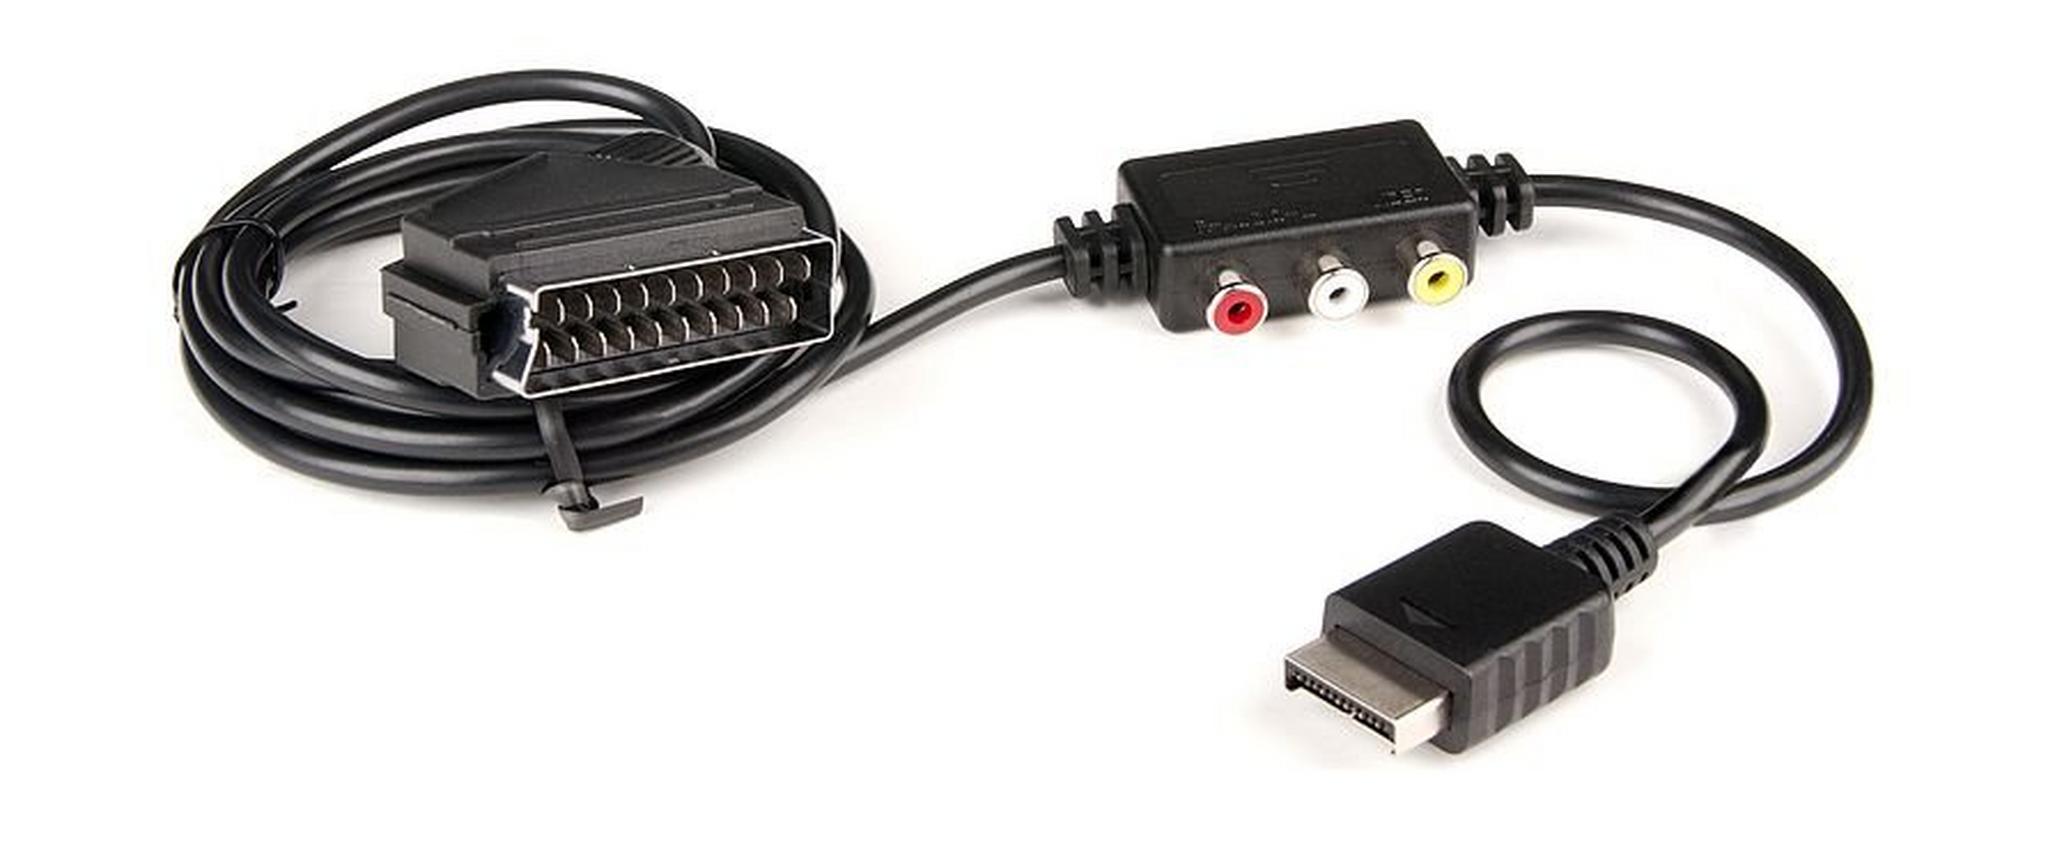 Speedlink Scart Video & Audio Cable For Playstation 3 (SL-4412) – Black